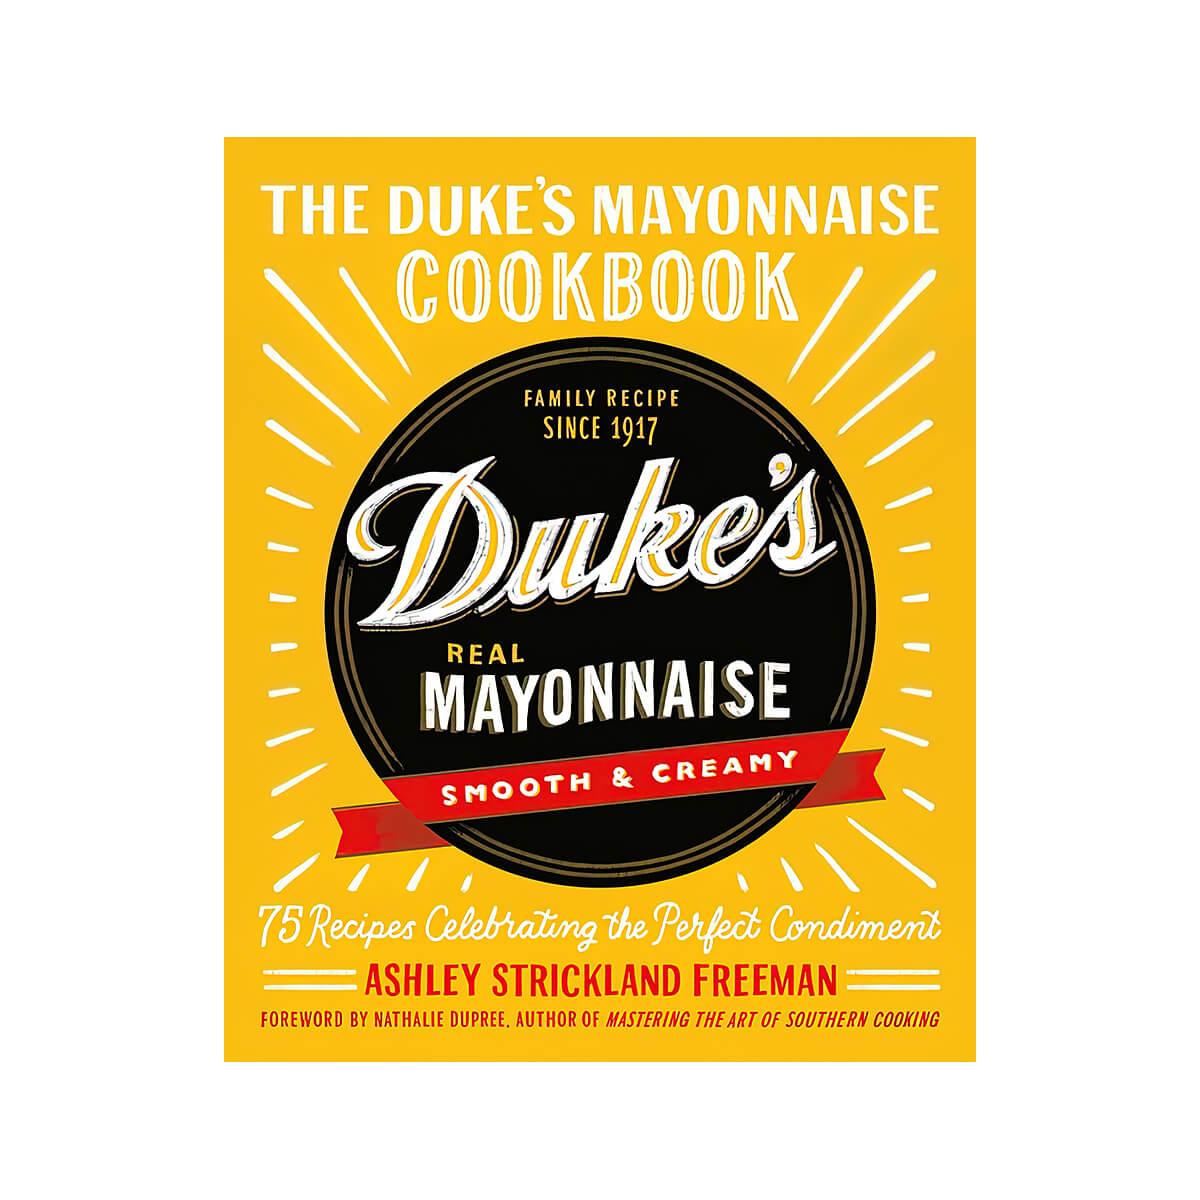  The Duke's Mayonnaise Cookbook